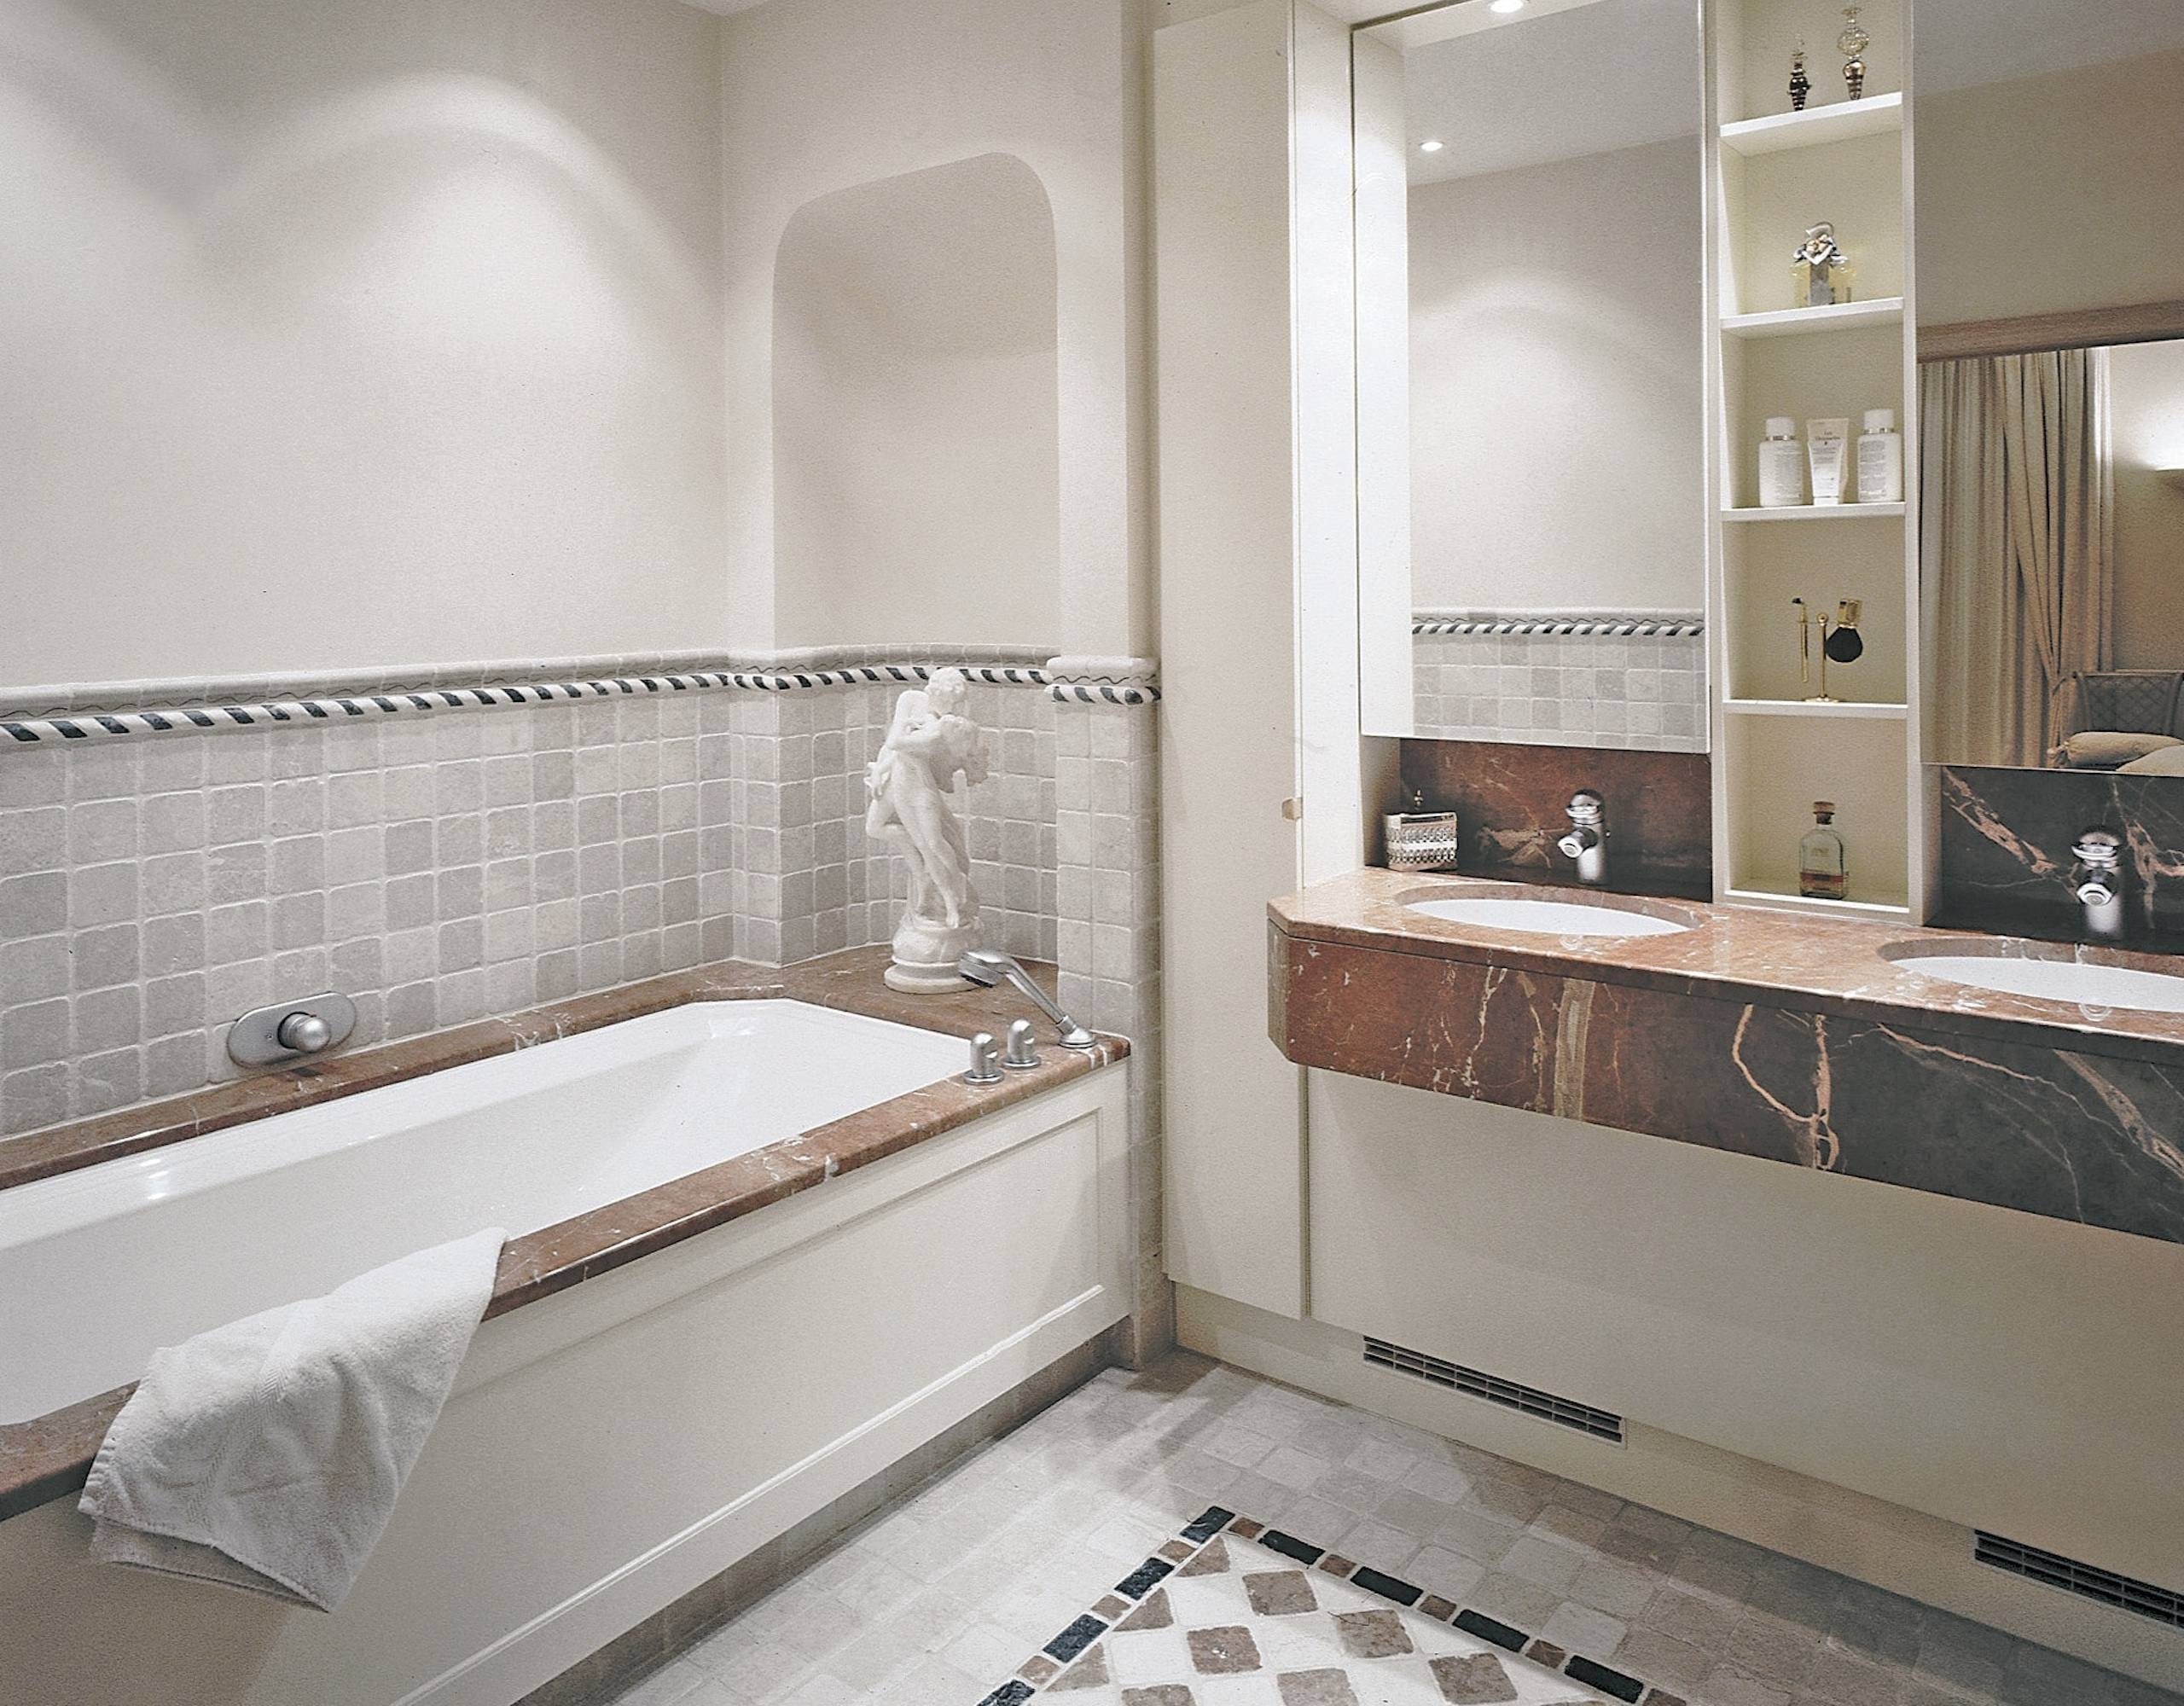 Vloerverwarming in de badkamer - Briotherm - Eco Systeem